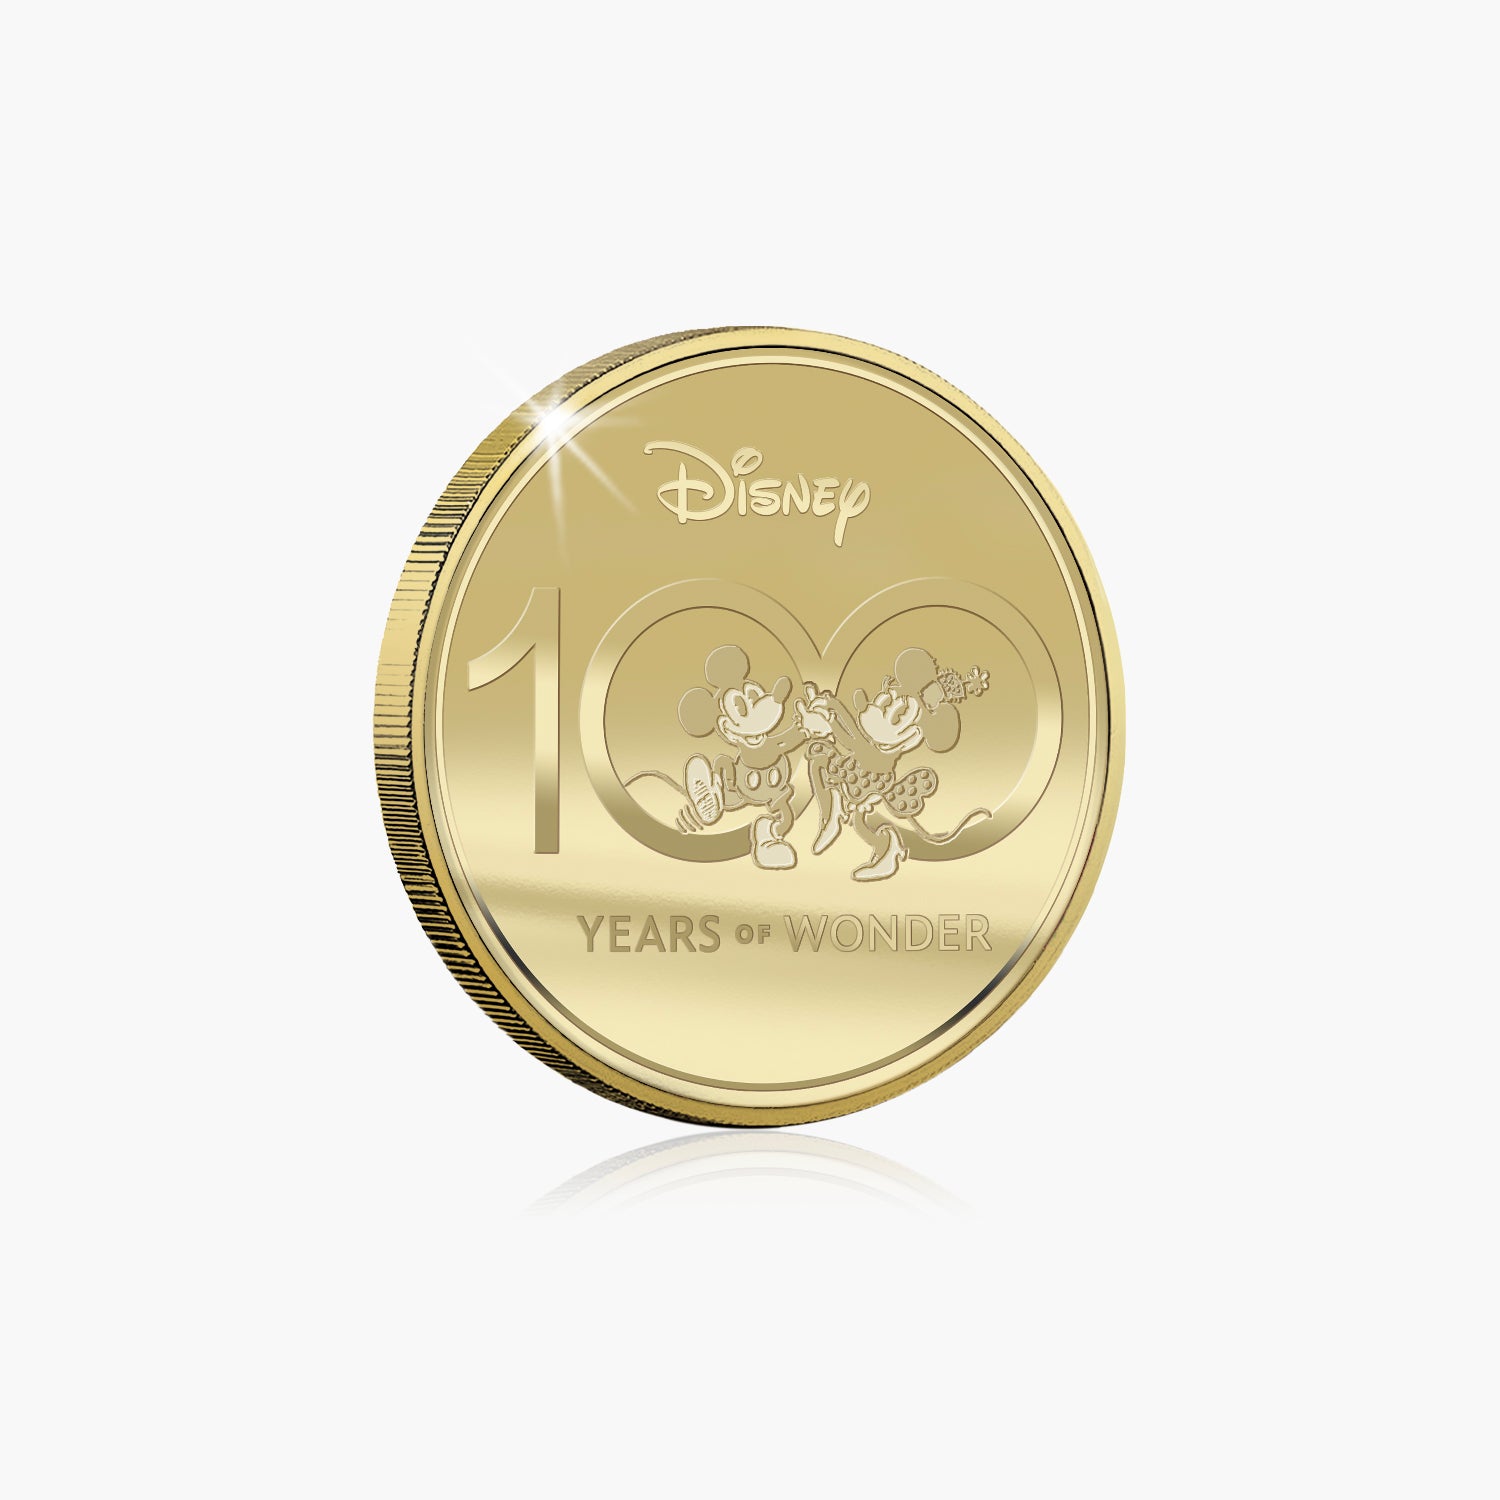 D100 Disney Sleeping Beauty Gold Plated Commemorative